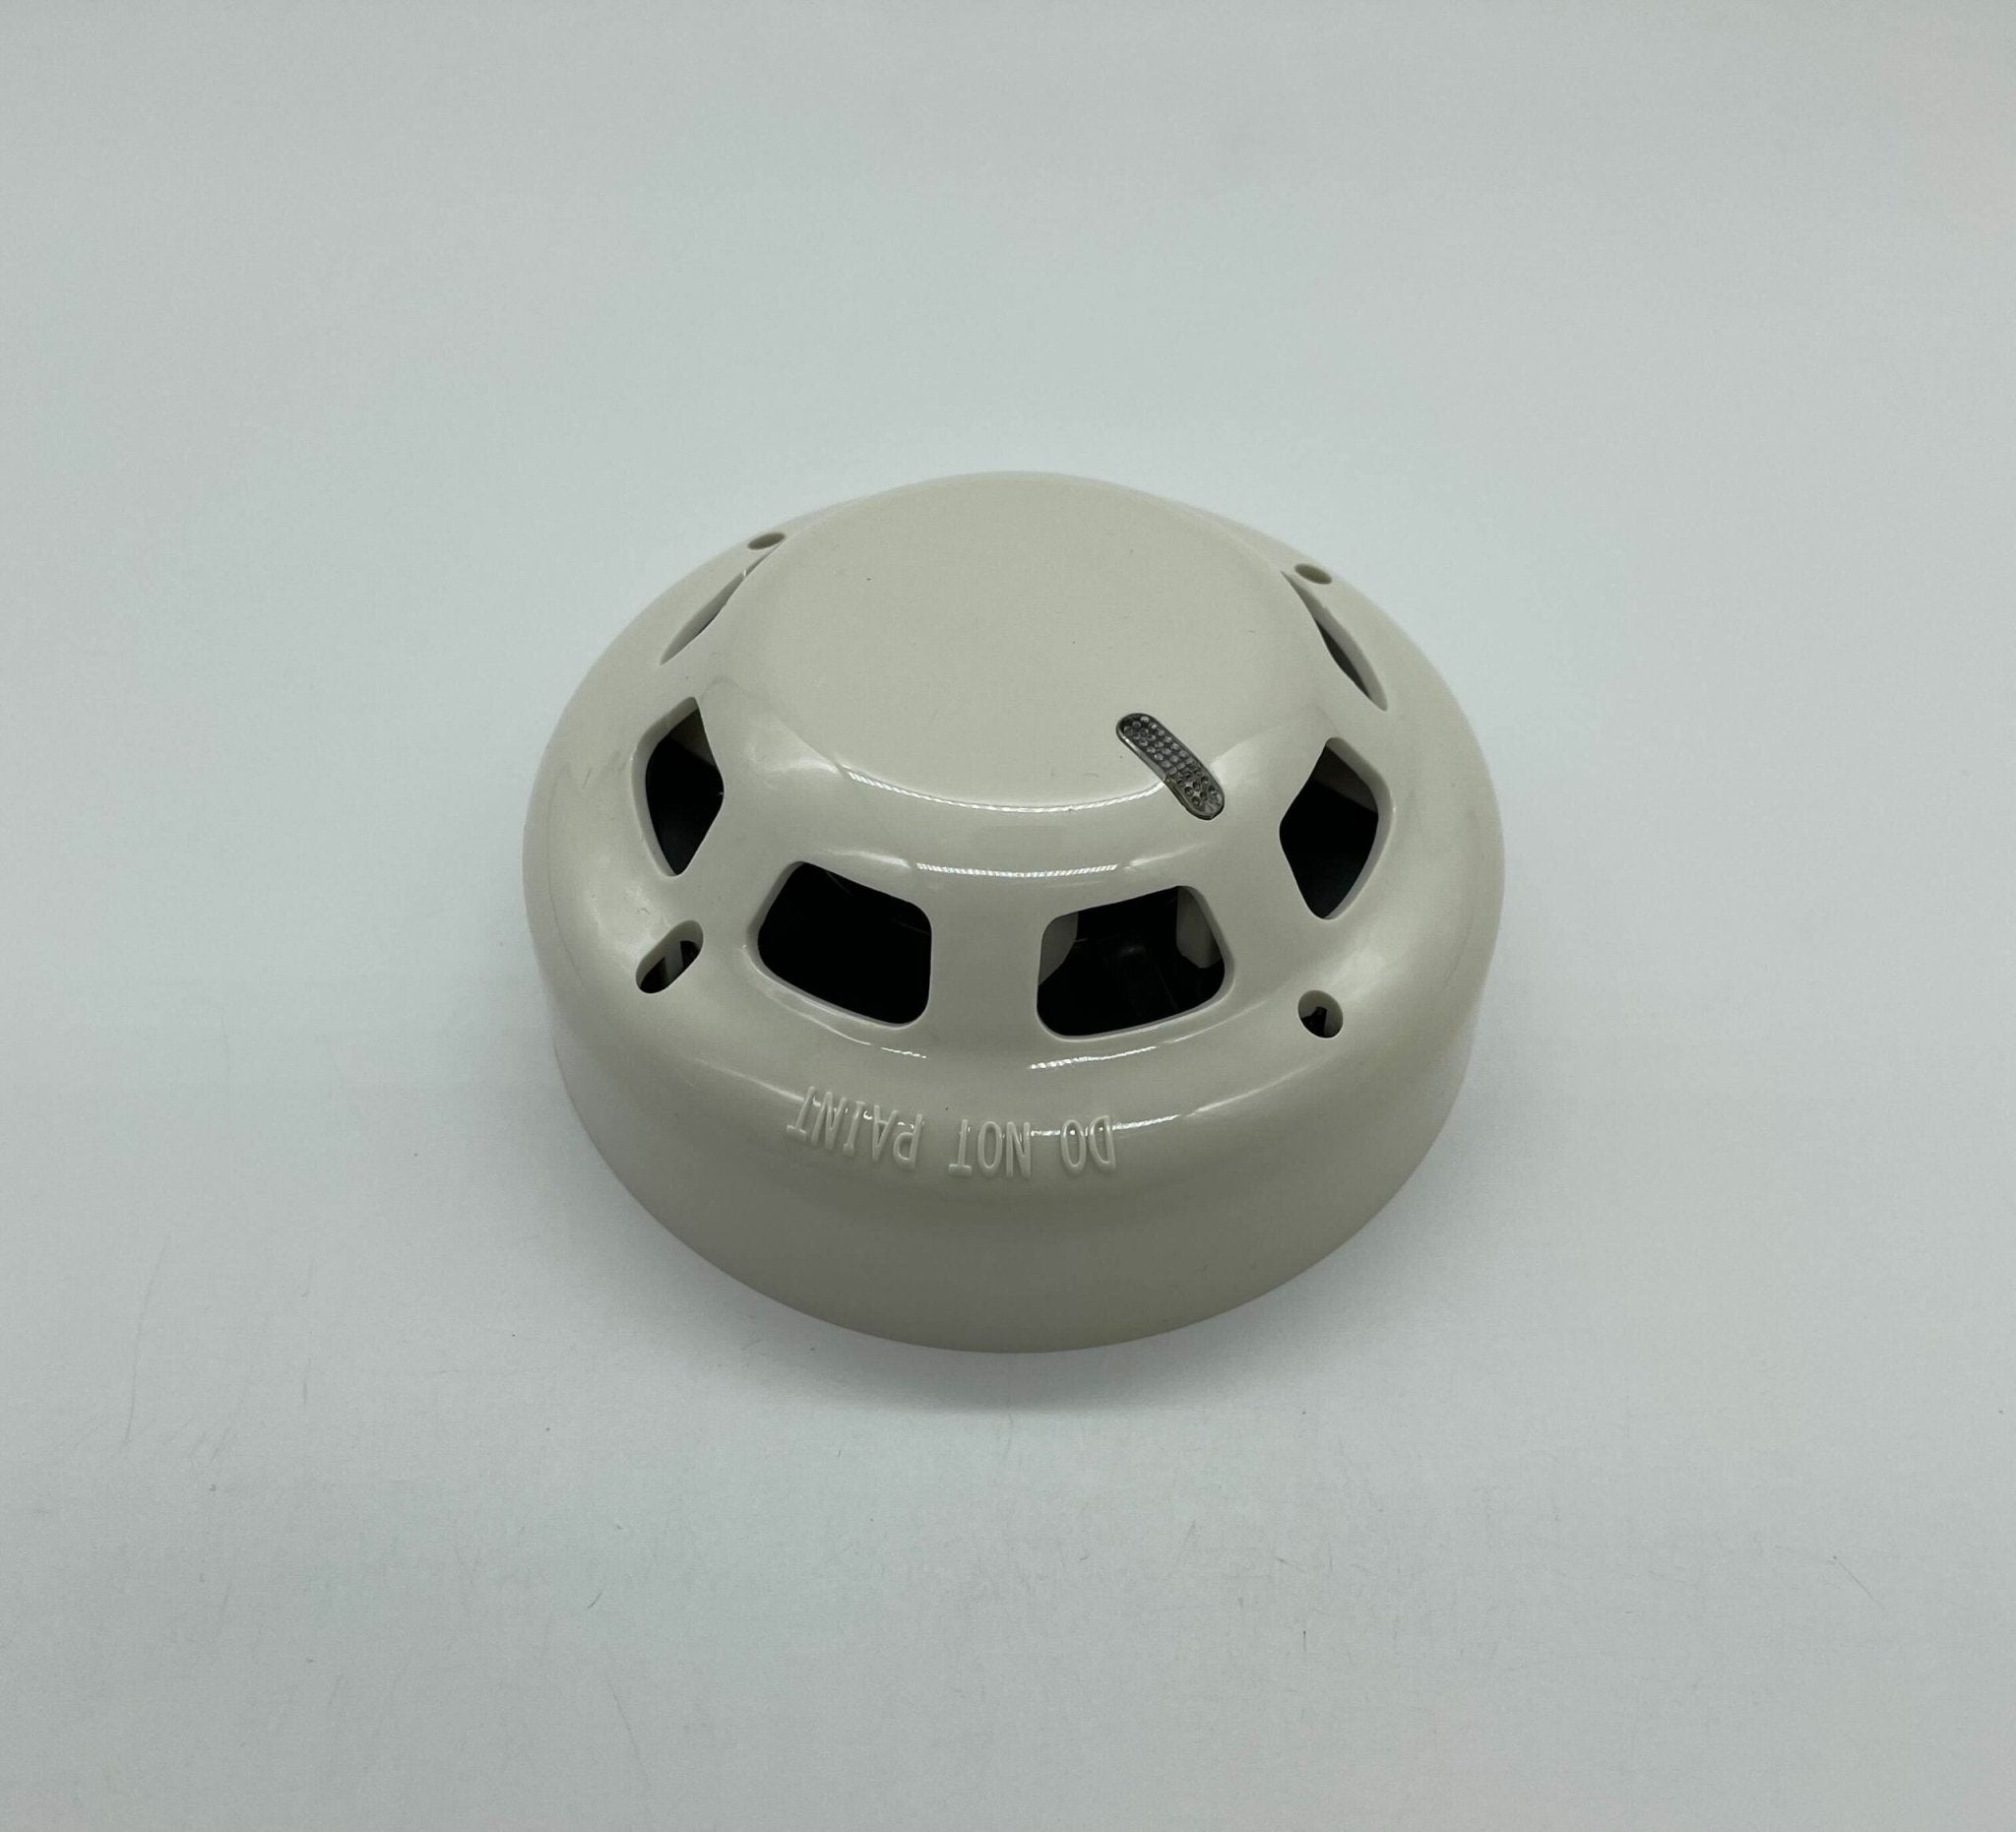 Hochiki SOC-24V Photoelectric Smoke Detector - The Fire Alarm Supplier